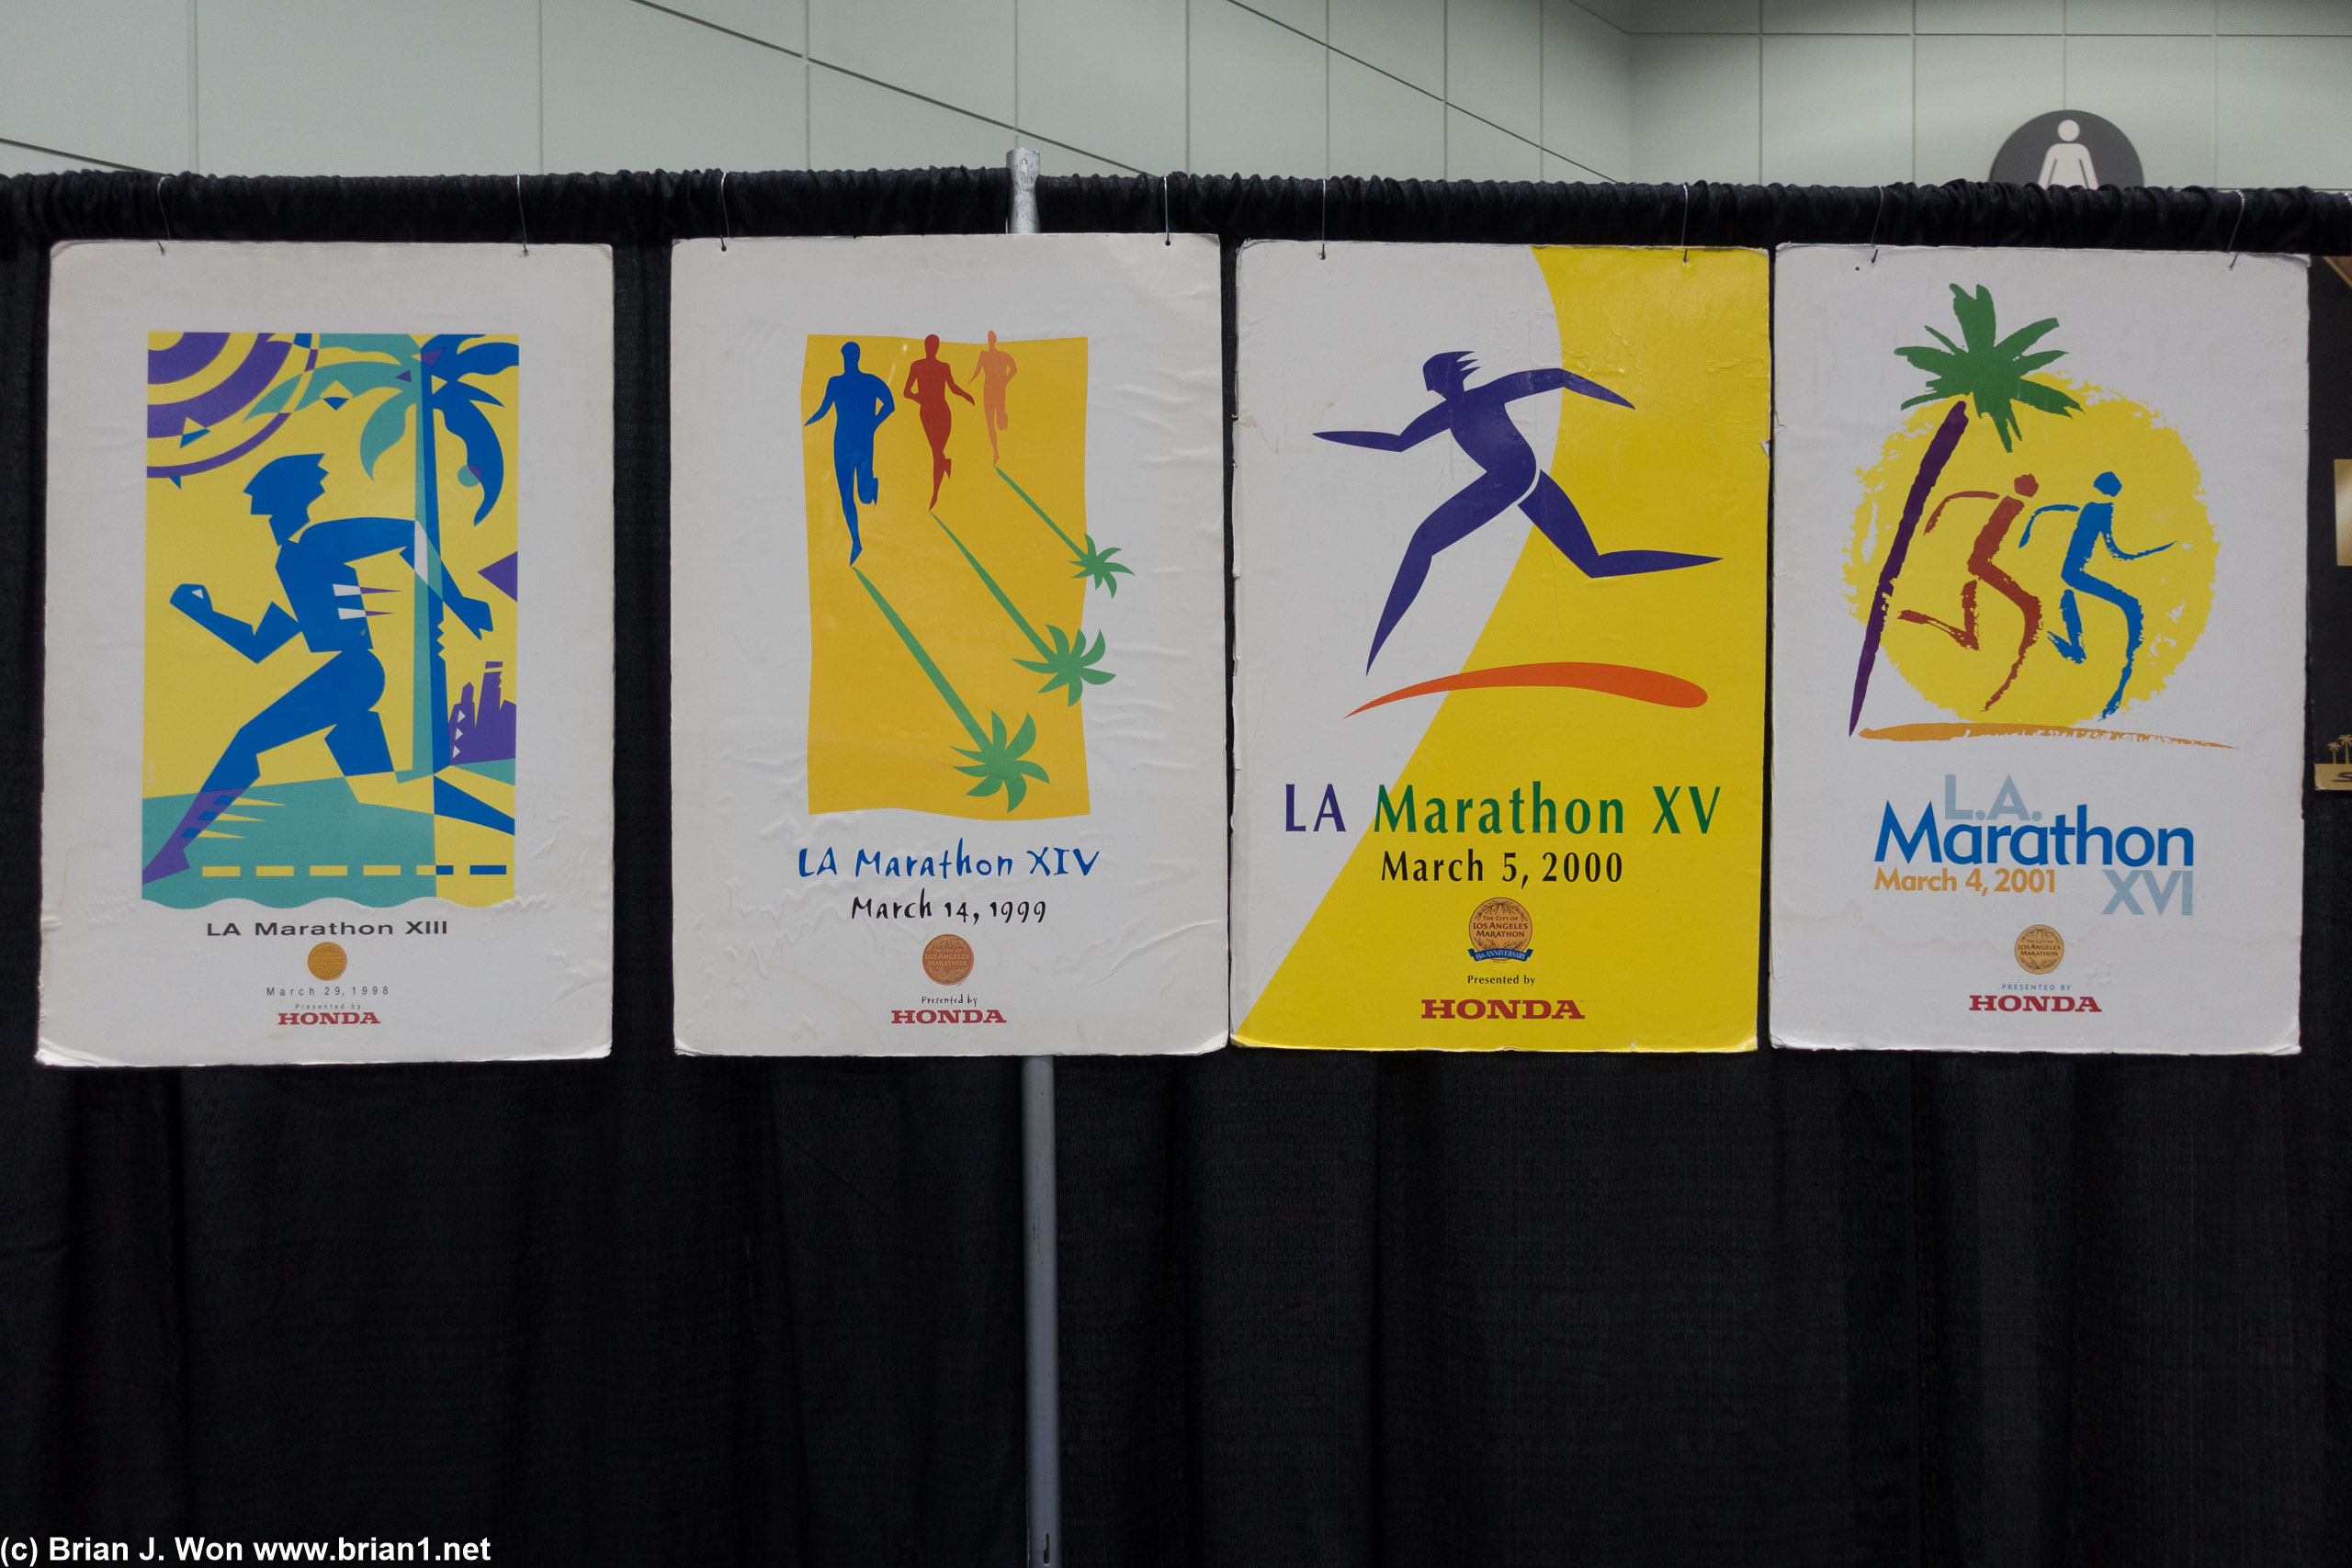 LA Marathon 1998 to 2001 posters.